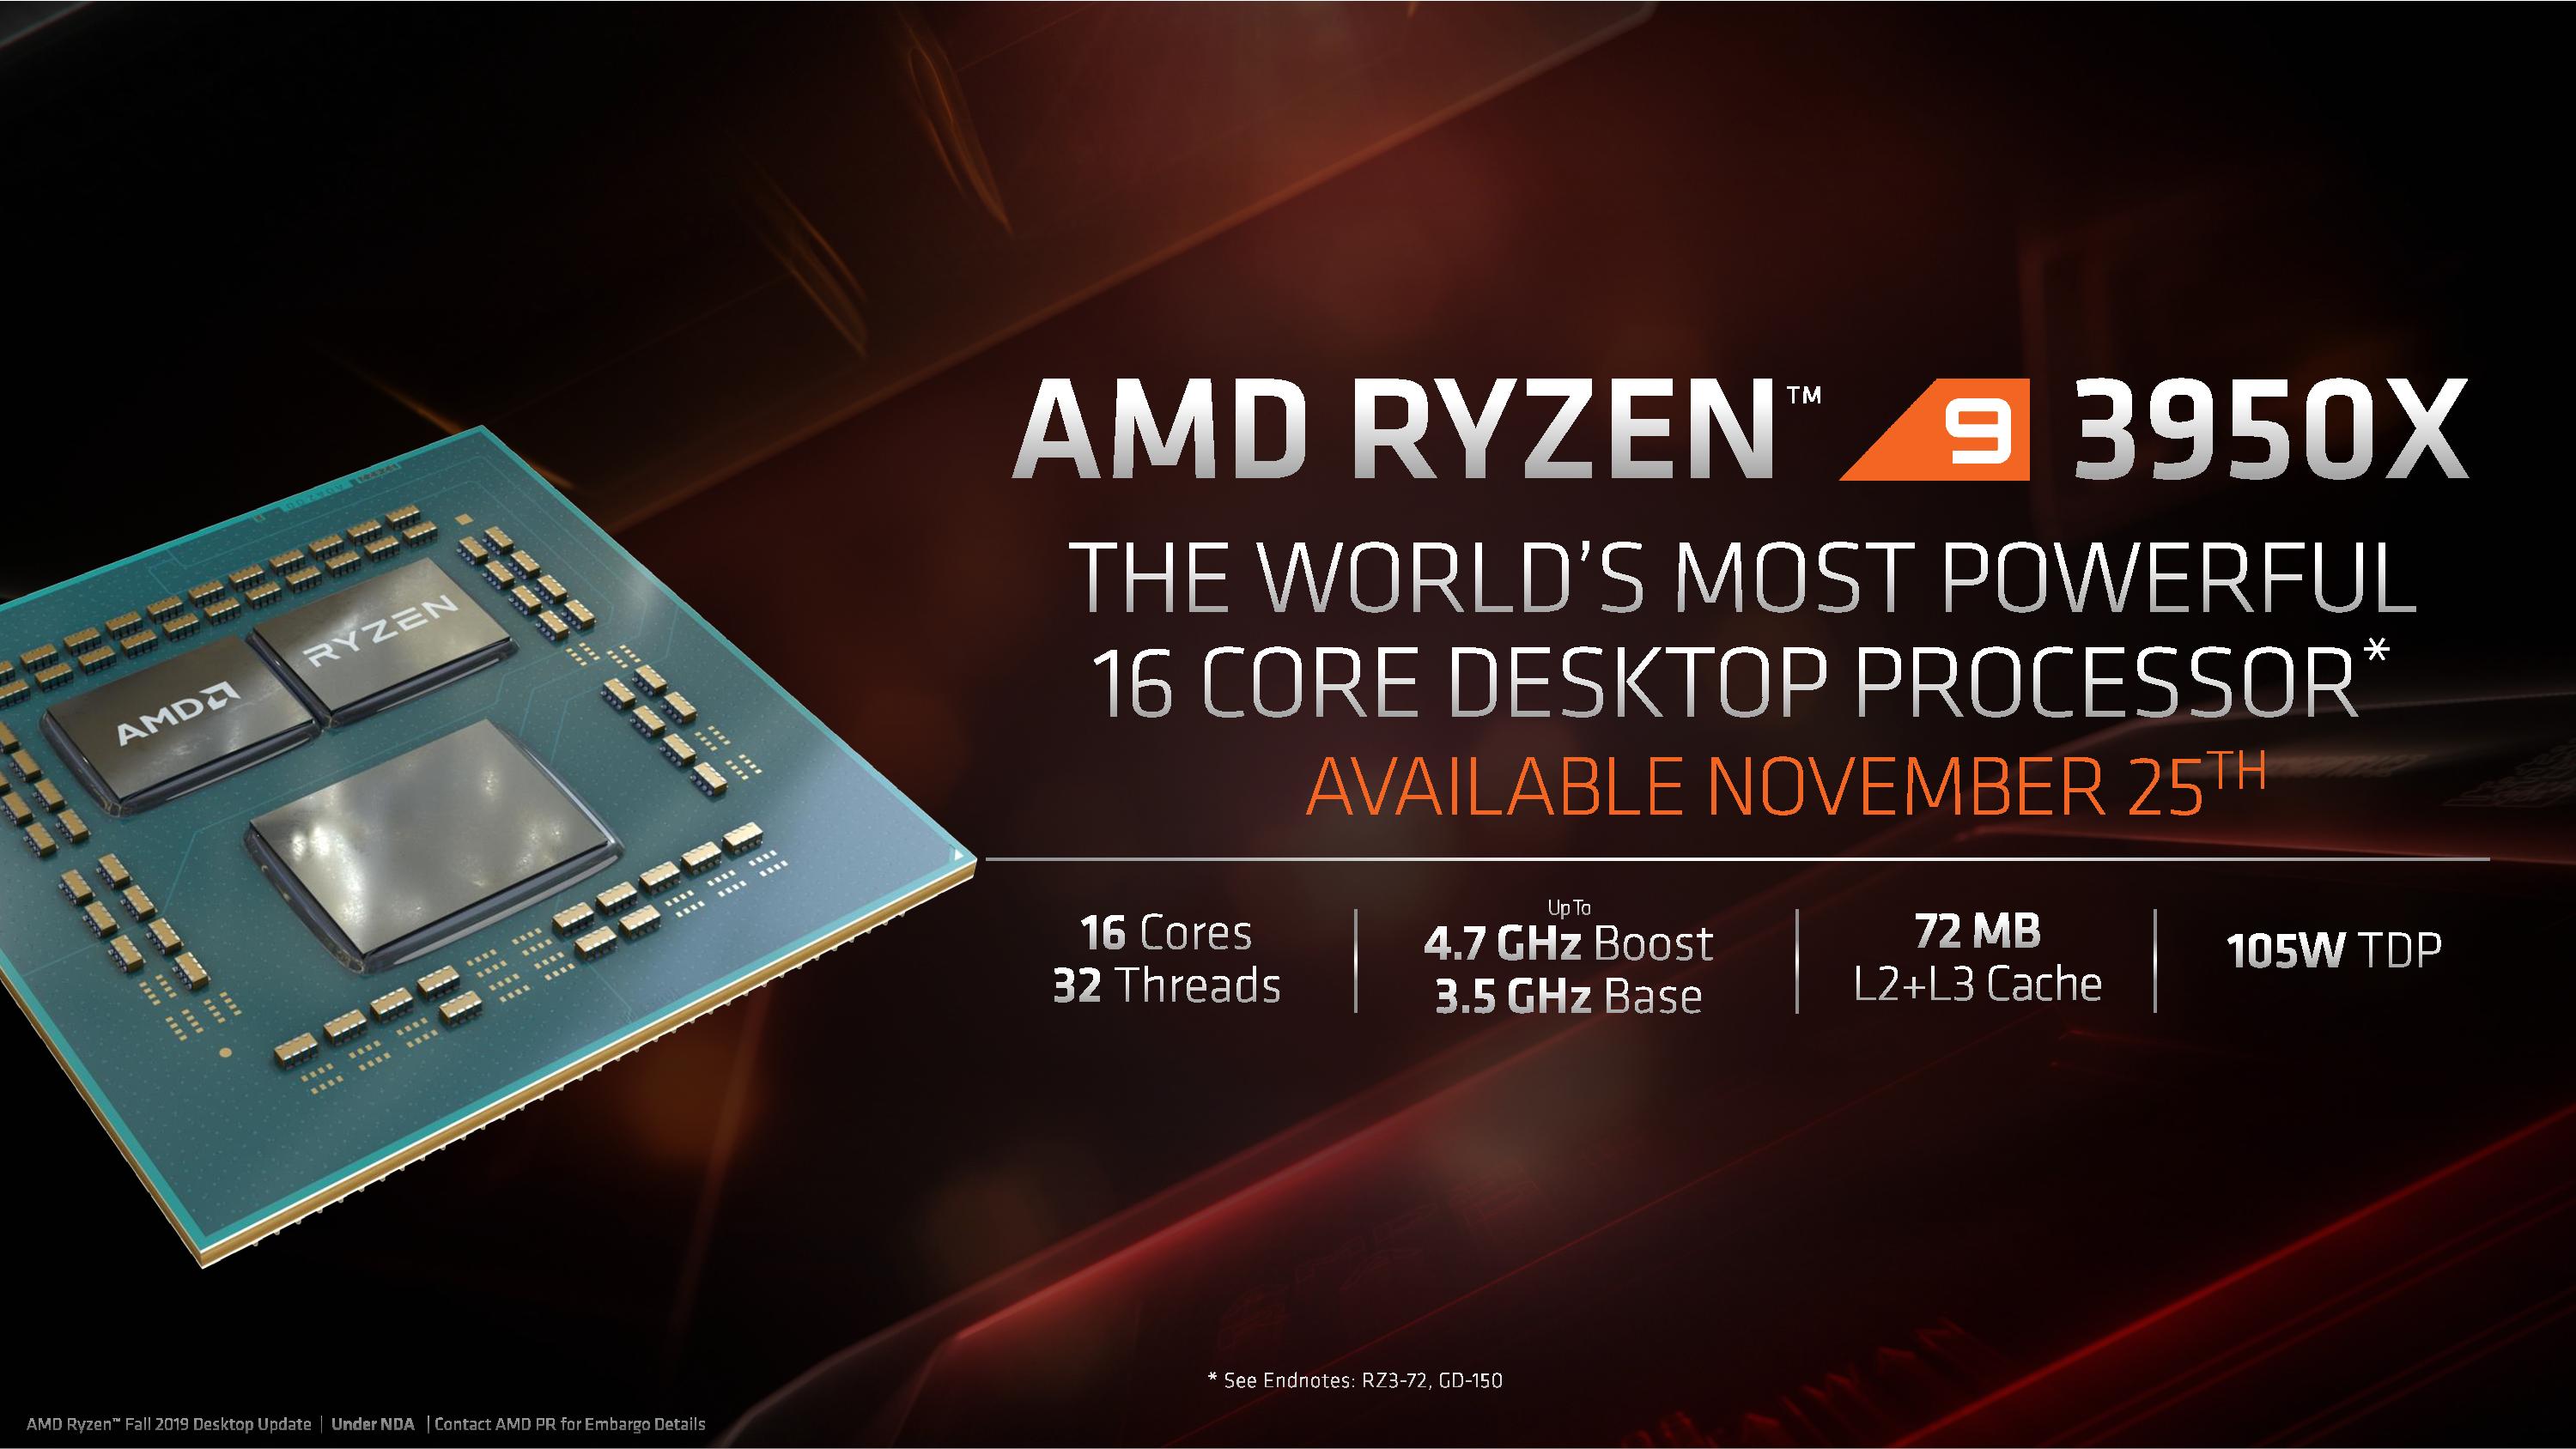 Ryzen 9 3950X: Retail on November 25th - AMD Q4: 16-core Ryzen 9